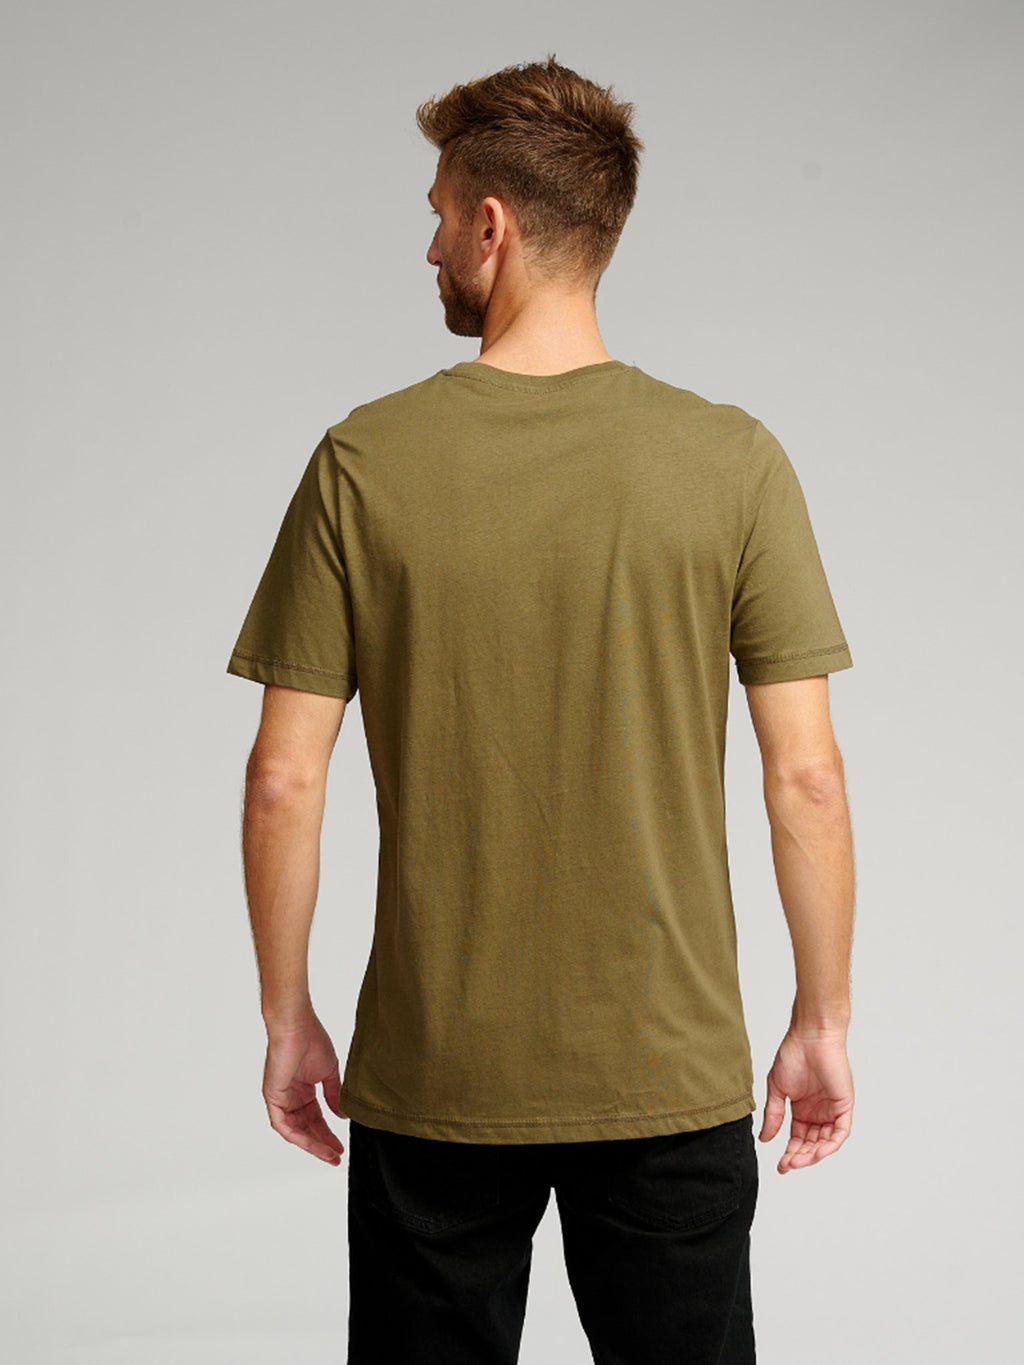 Camiseta básica orgánica - Ejército